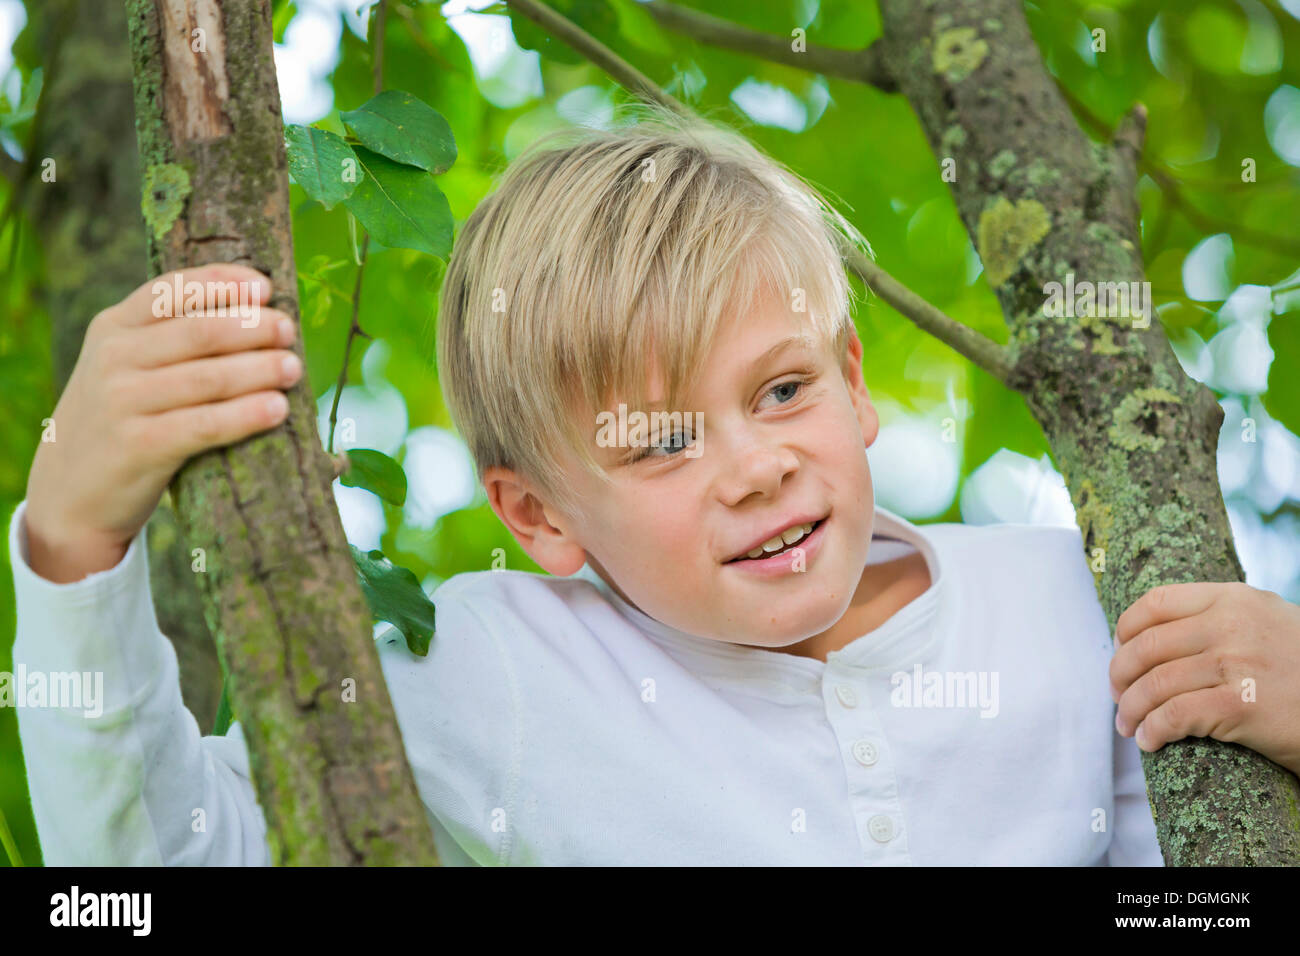 Boy, 9 years old, climbing on a tree Stock Photo